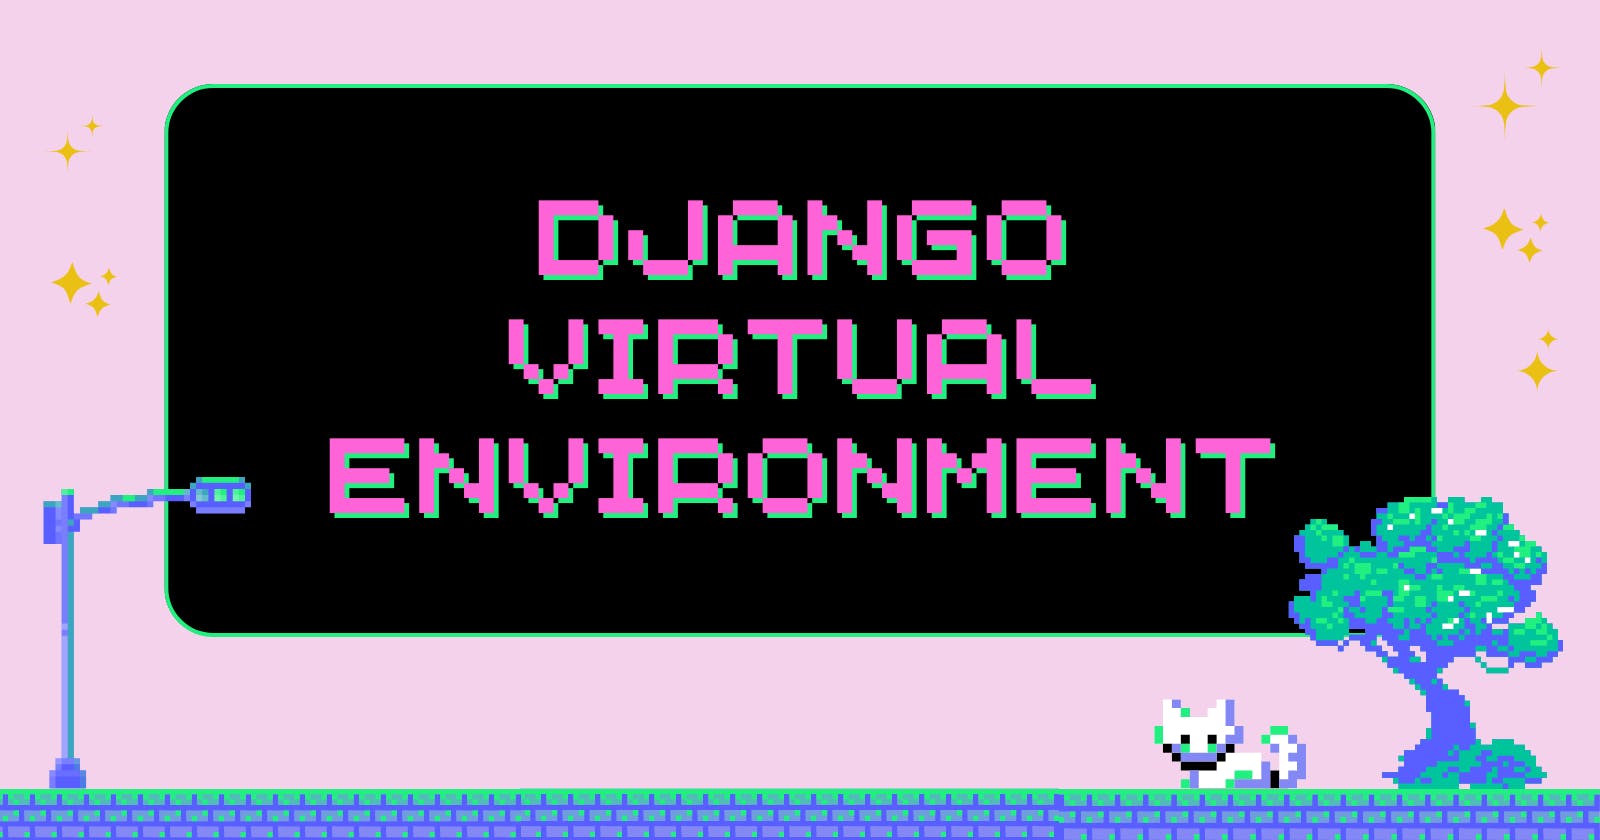 How to set up a virtual environment for Django using python